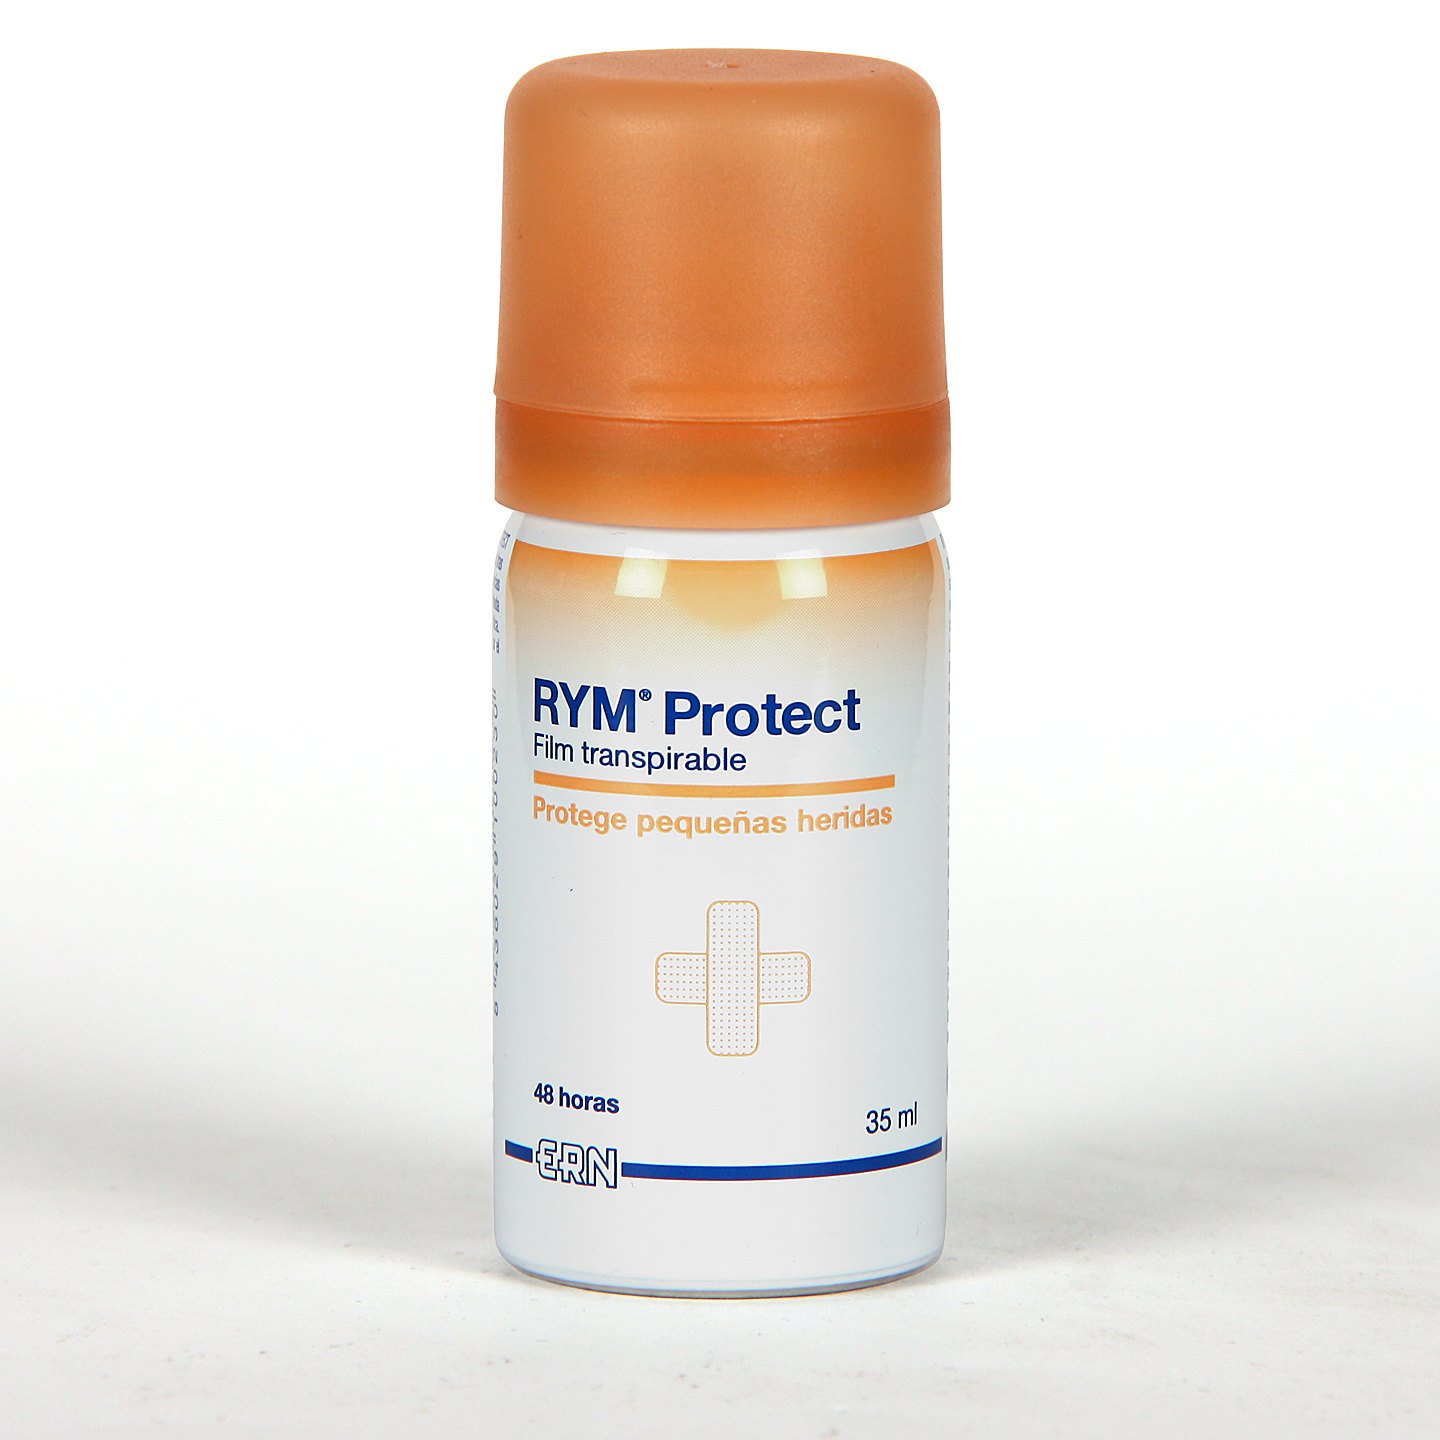 Rym Protect Film transpirable 35 ml Farmacia Jiménez